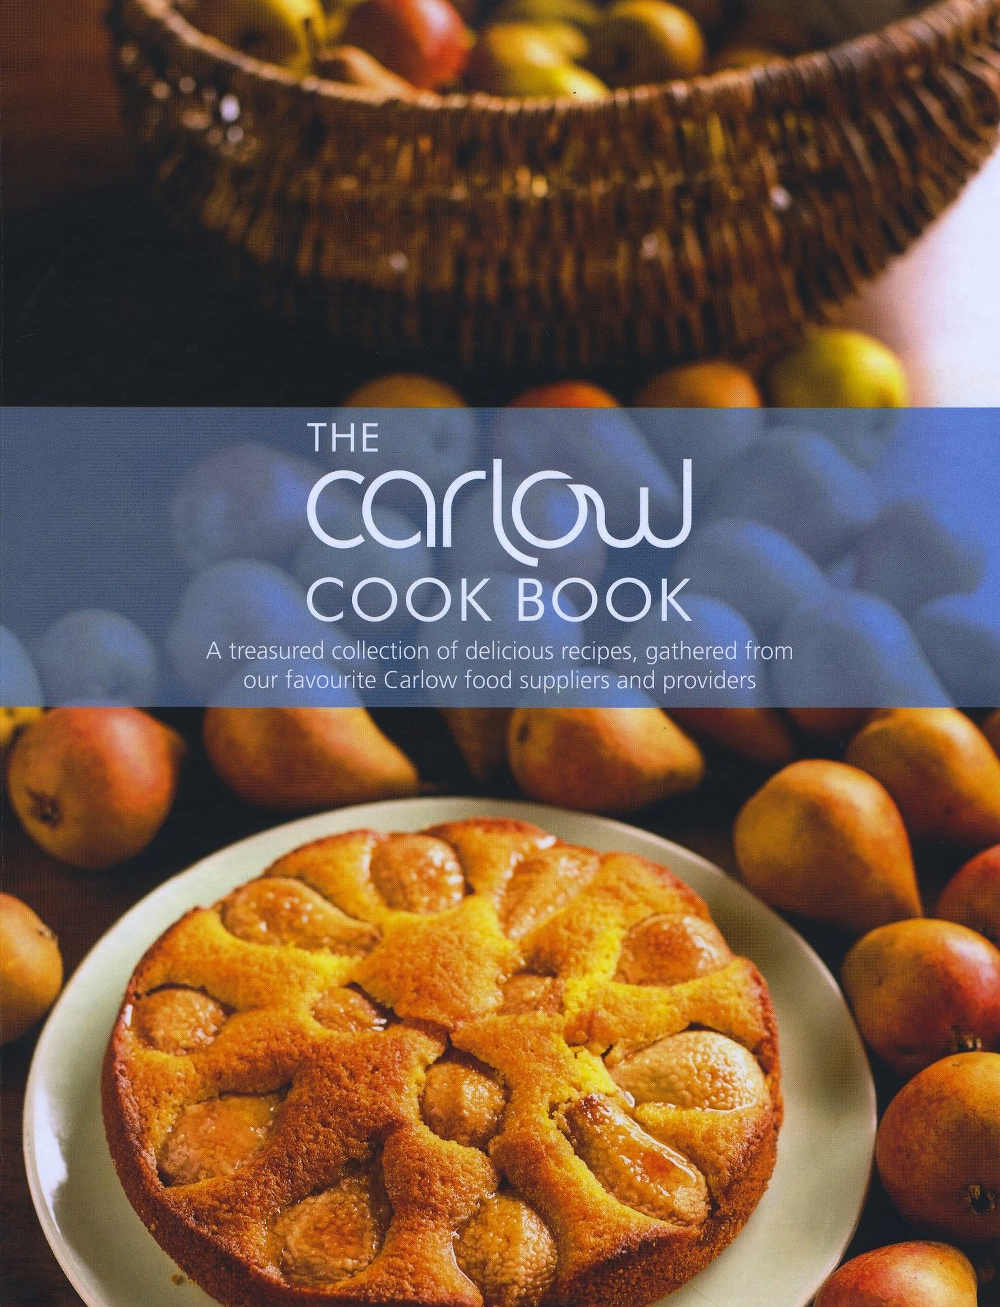 The Carlow Cook Book (hardback, €12.50)